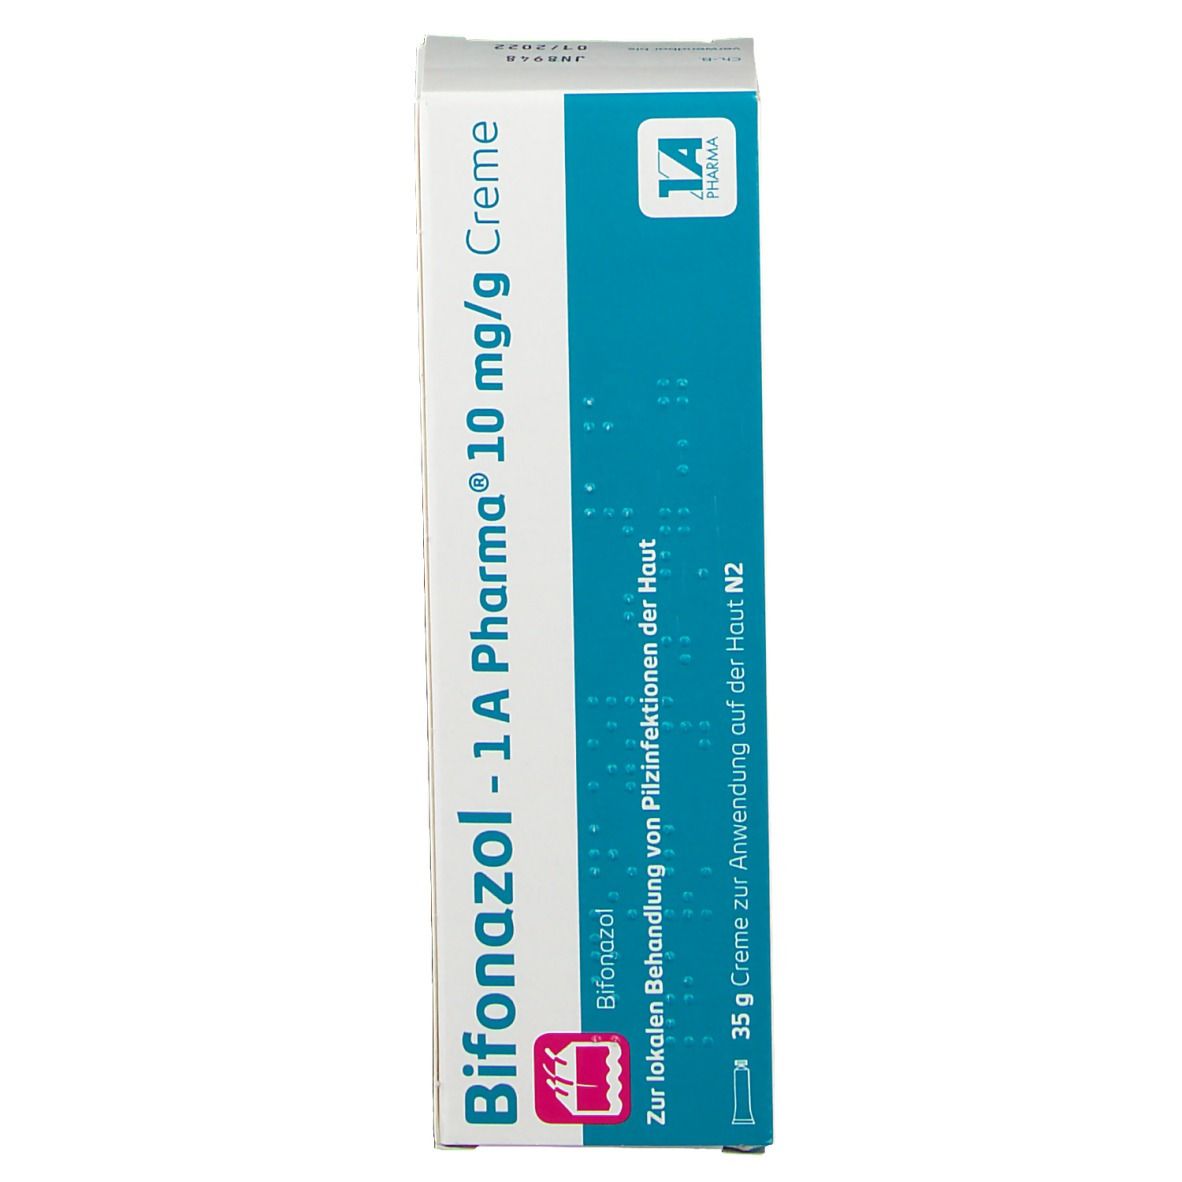 Bifonazol - 1 A Pharma® 10 mg/g